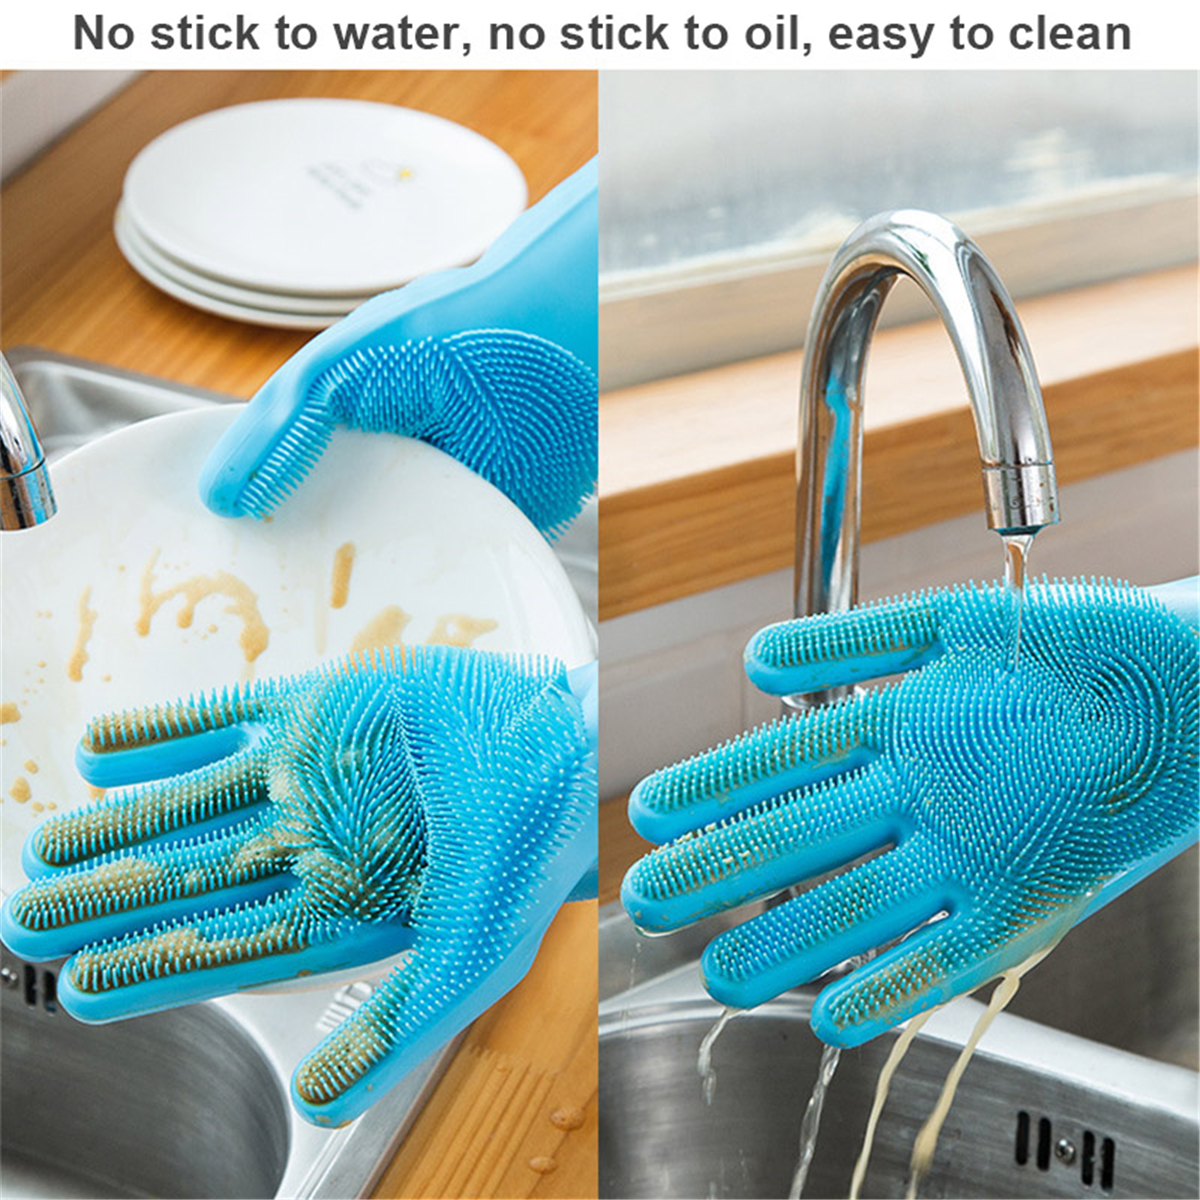 1-Pair-Magic-Silicone-Dishwashing-Scrubber-Dish-Washing-Sponge-Rubber-Scrub-Gloves-Kitchen-Cleaning--1801299-2